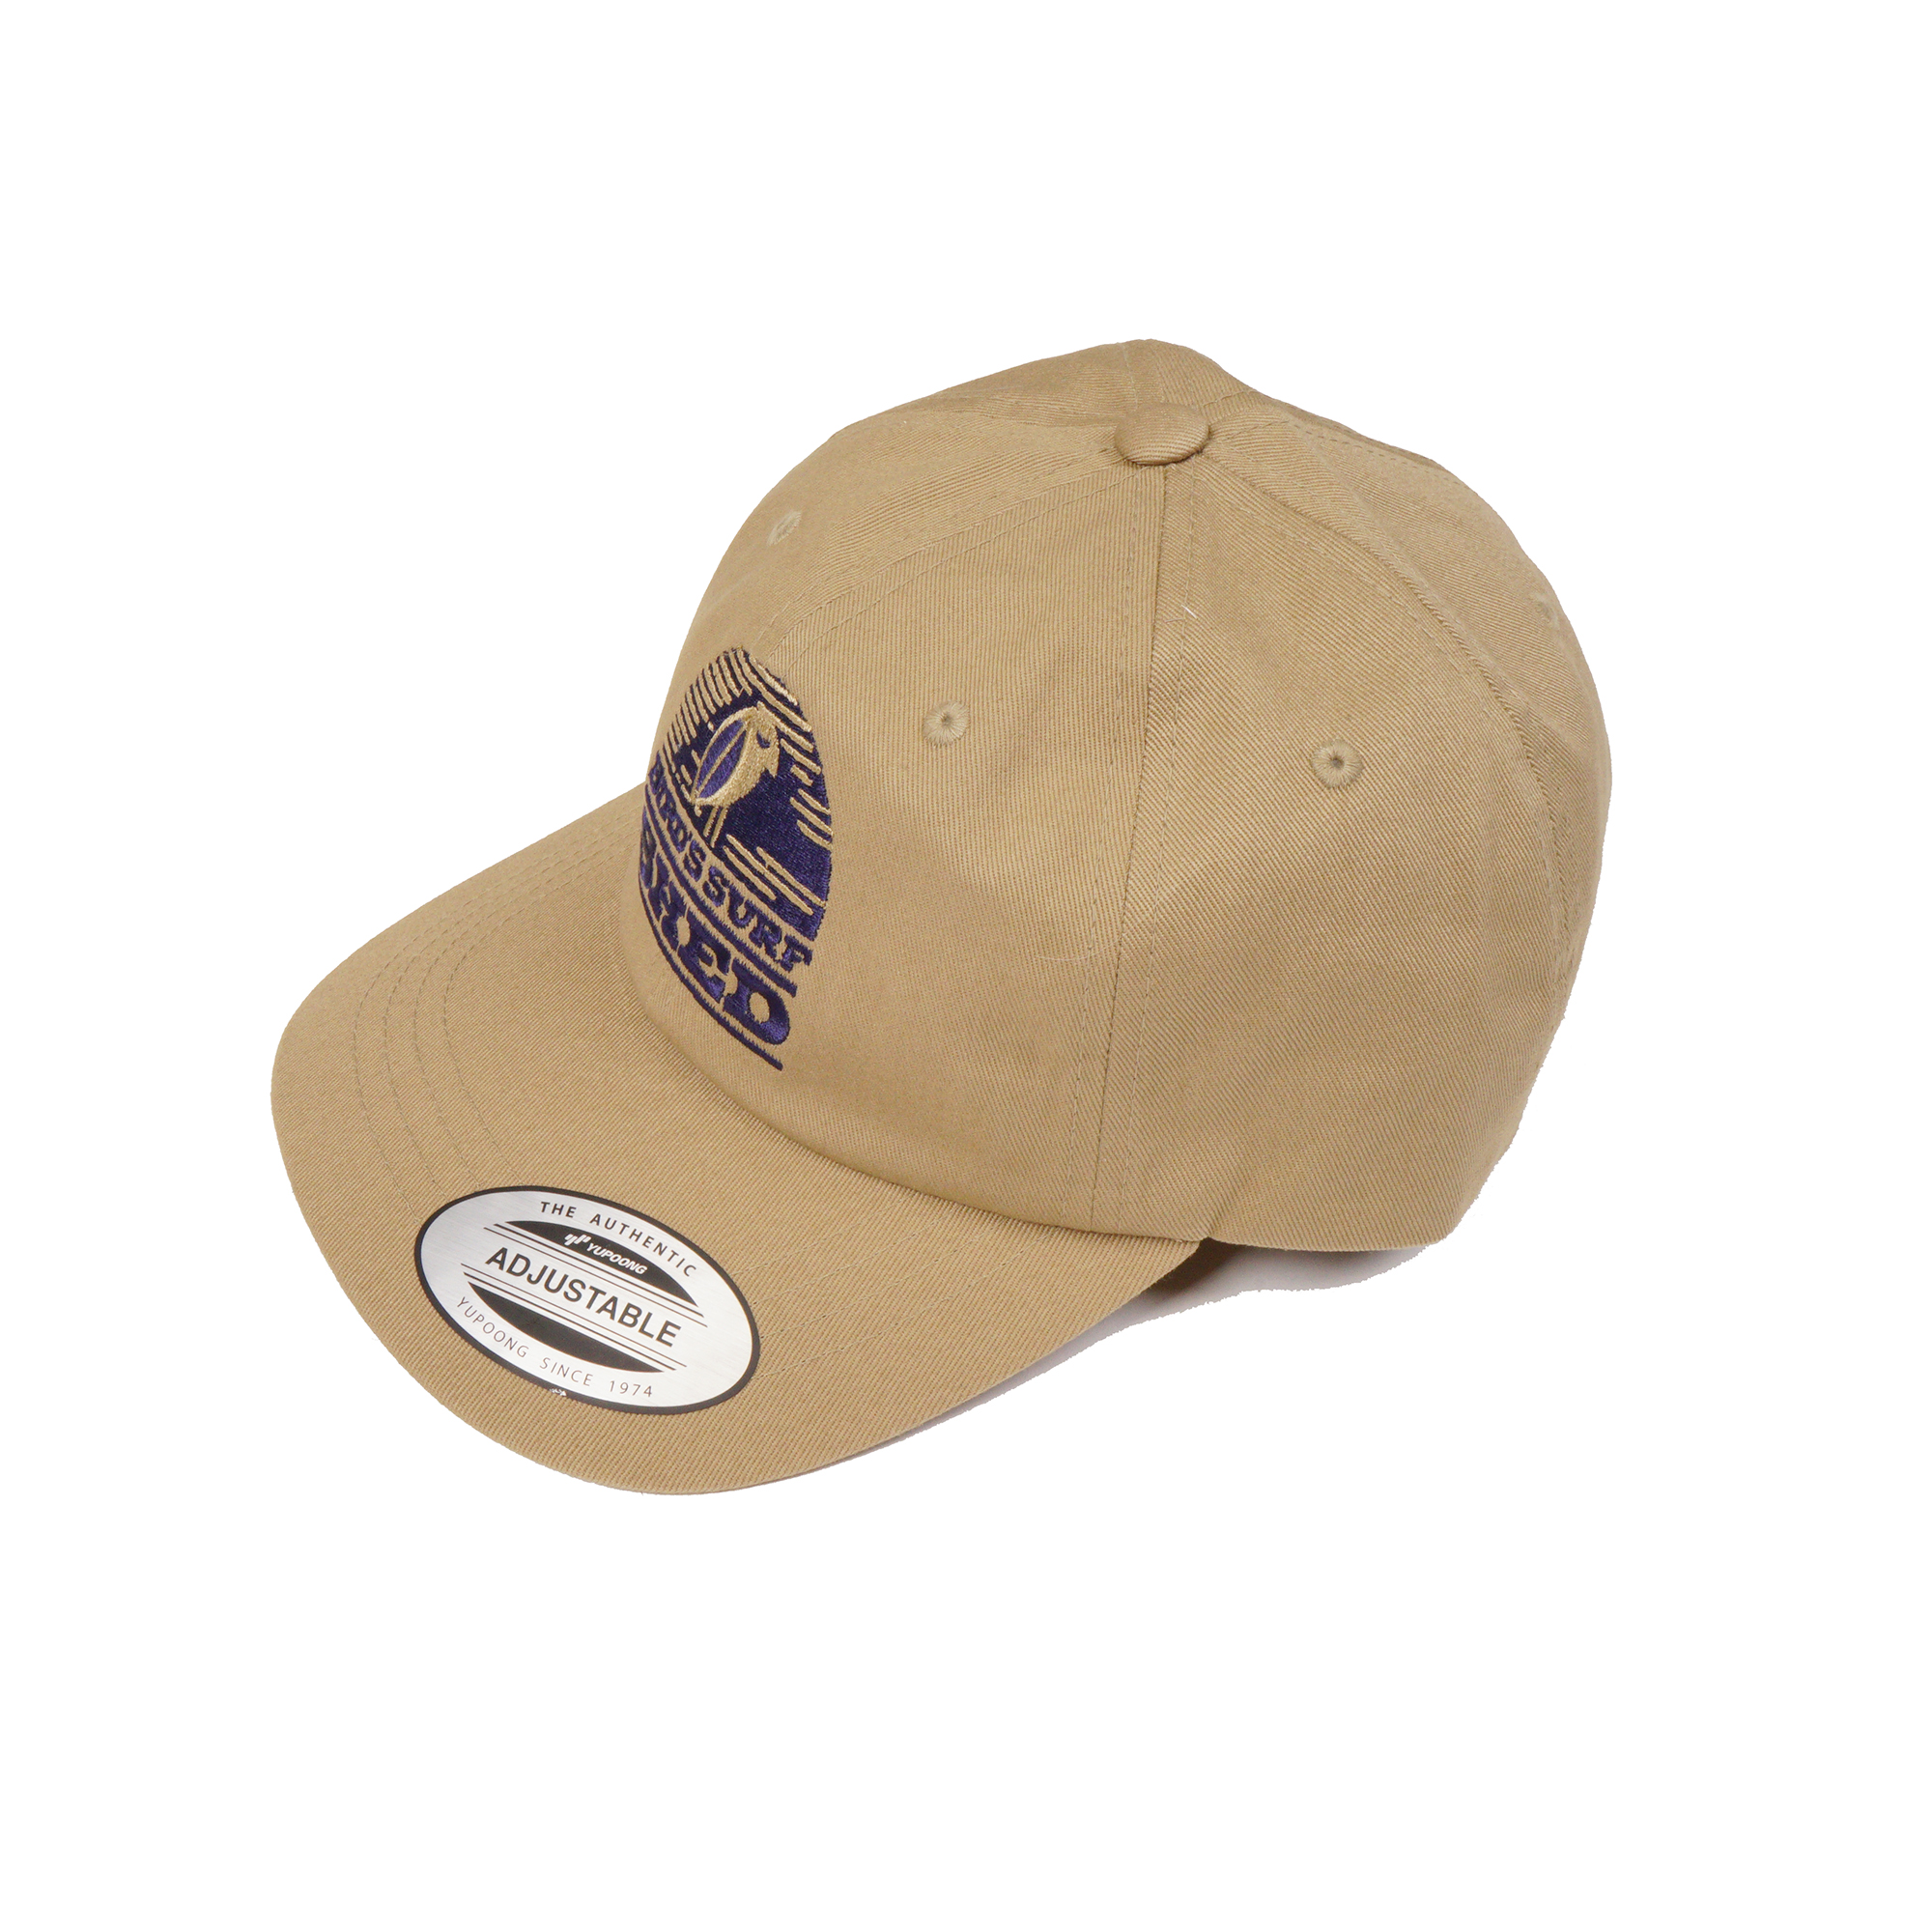 oONESIR Kids Logo Reddy Kilowatt Baseball Cap Adjustable Strapback Dad Hat Mesh for Boys Girls